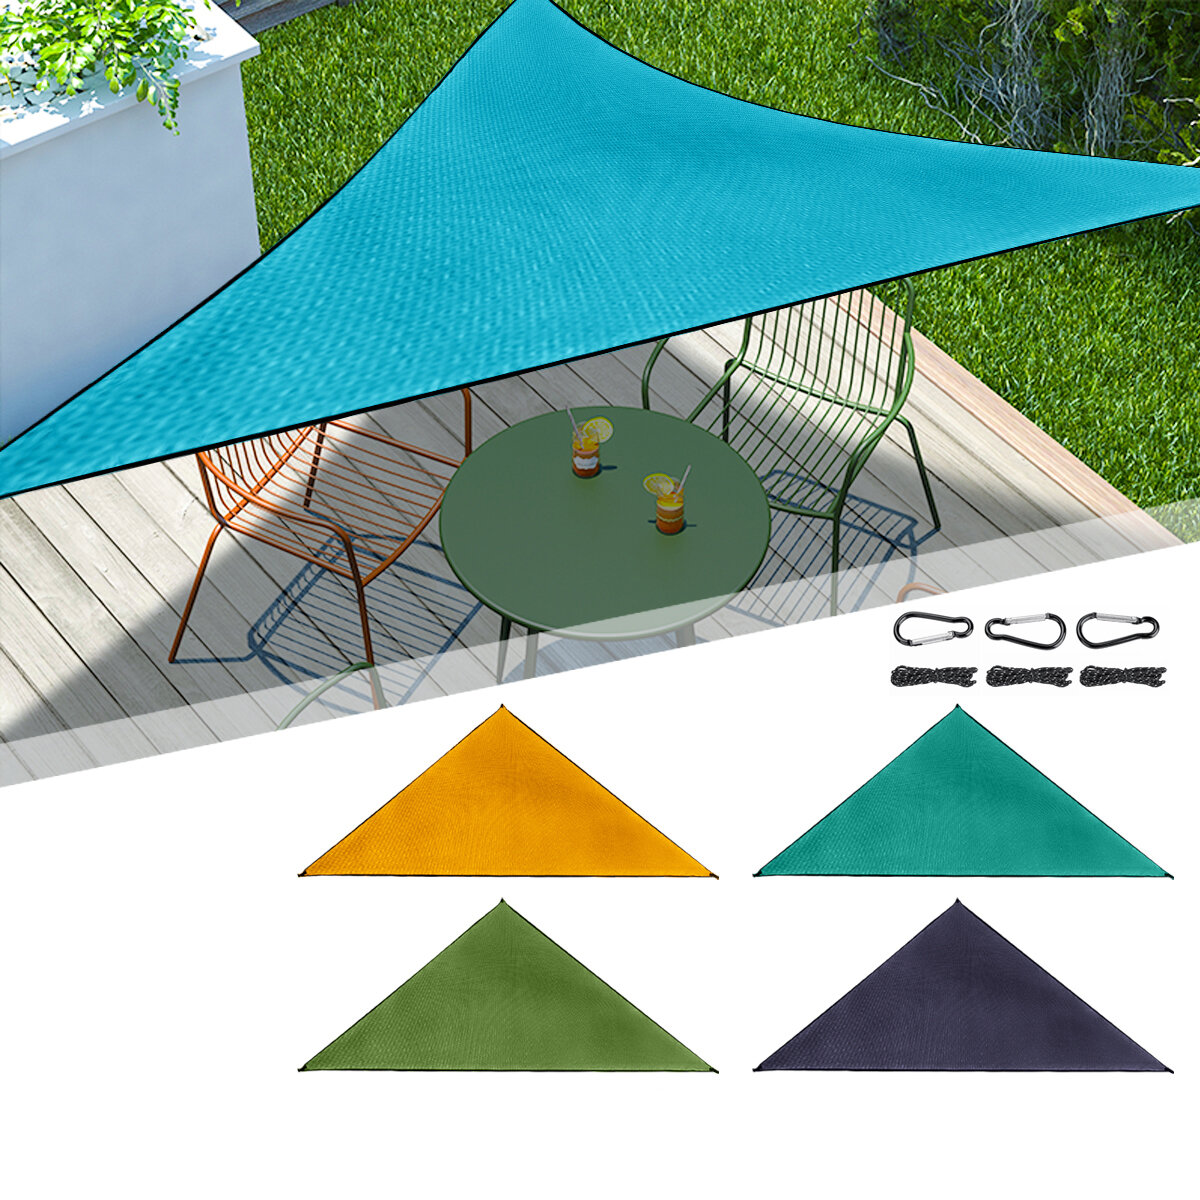 6x6x6m Sunshade Awning Waterproof Canopy Cover UV-proof Swimming Yard Beach Garden Patio Sail